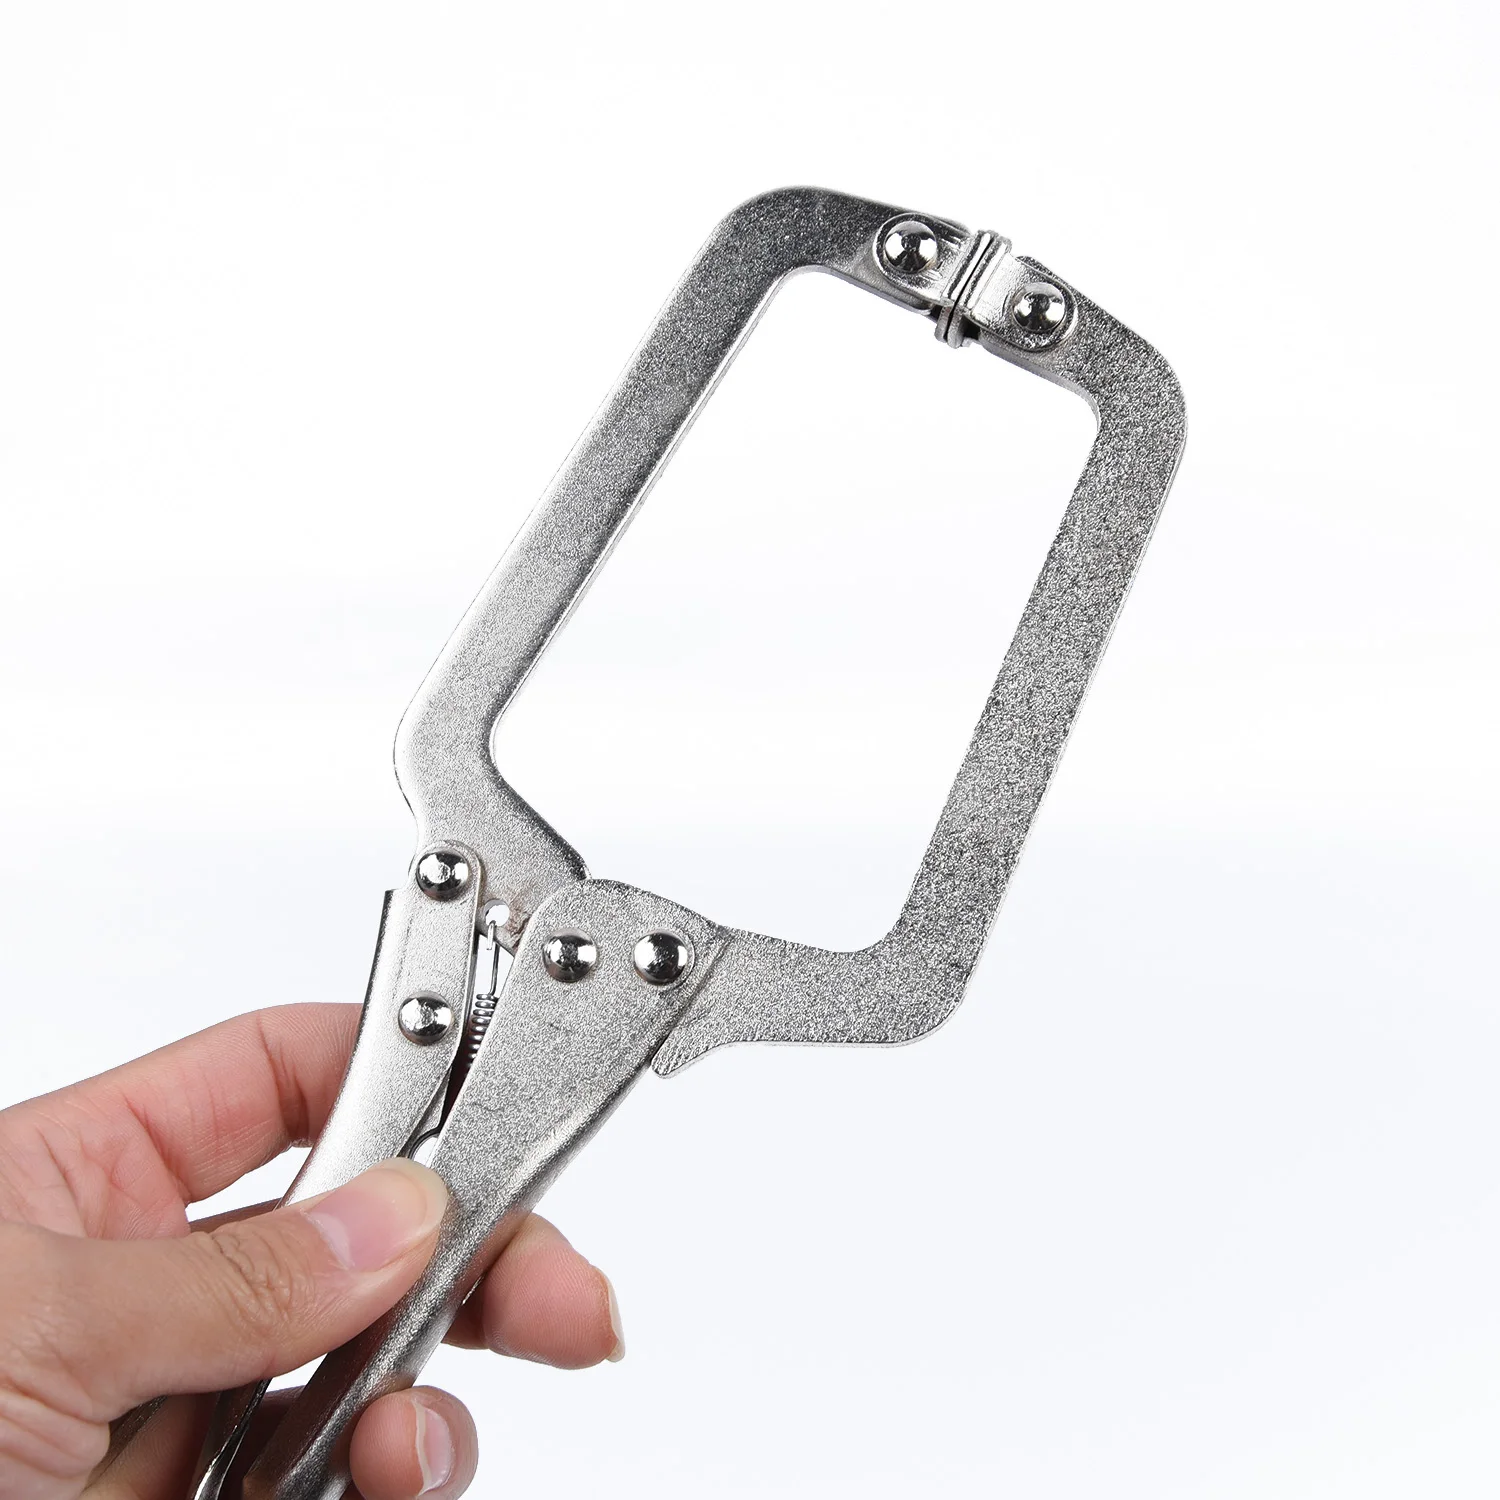 

9" Inch Steel C Clamp Vise Grip Locking Welding Pliers Wood Tenon Locator Tool Clamps Vises Hand Tools Metal Pliers Durable